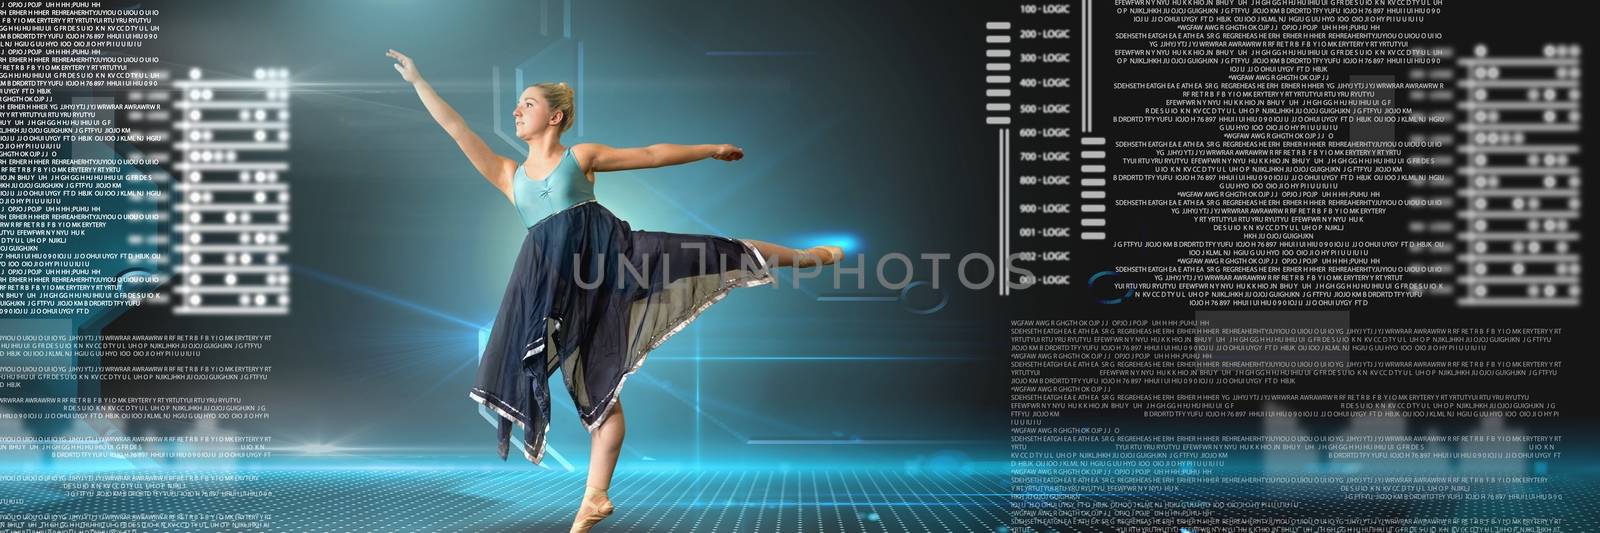 Dancer with digital technology interface by Wavebreakmedia